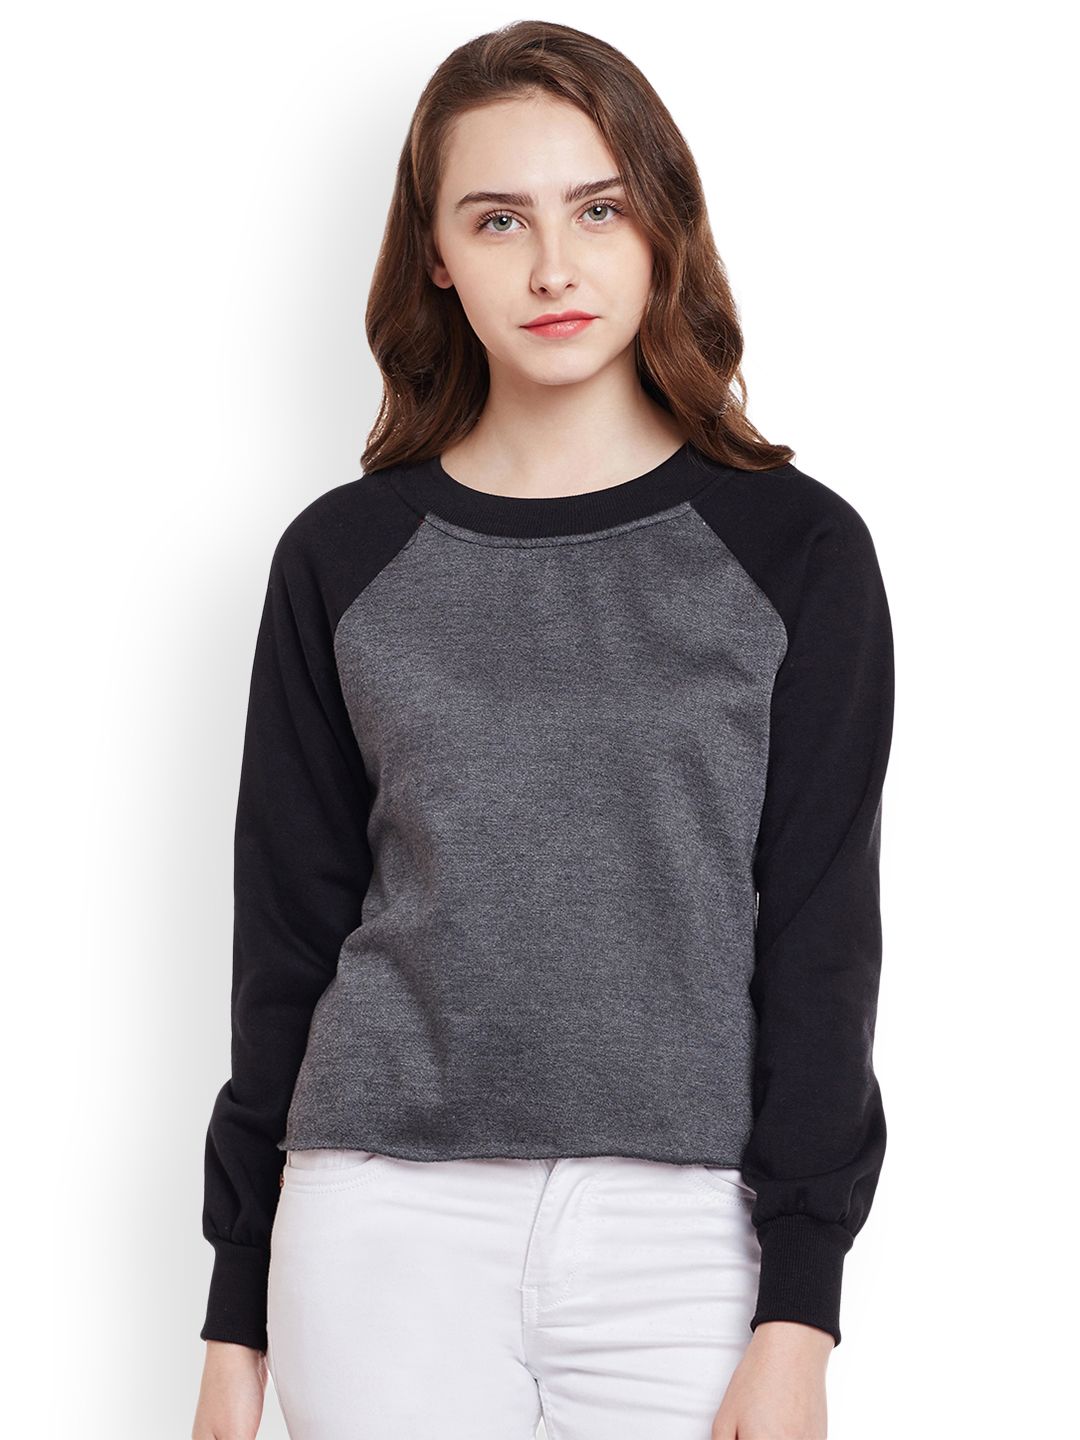 Belle Fille Women Grey & Black Solid Sweatshirt Price in India